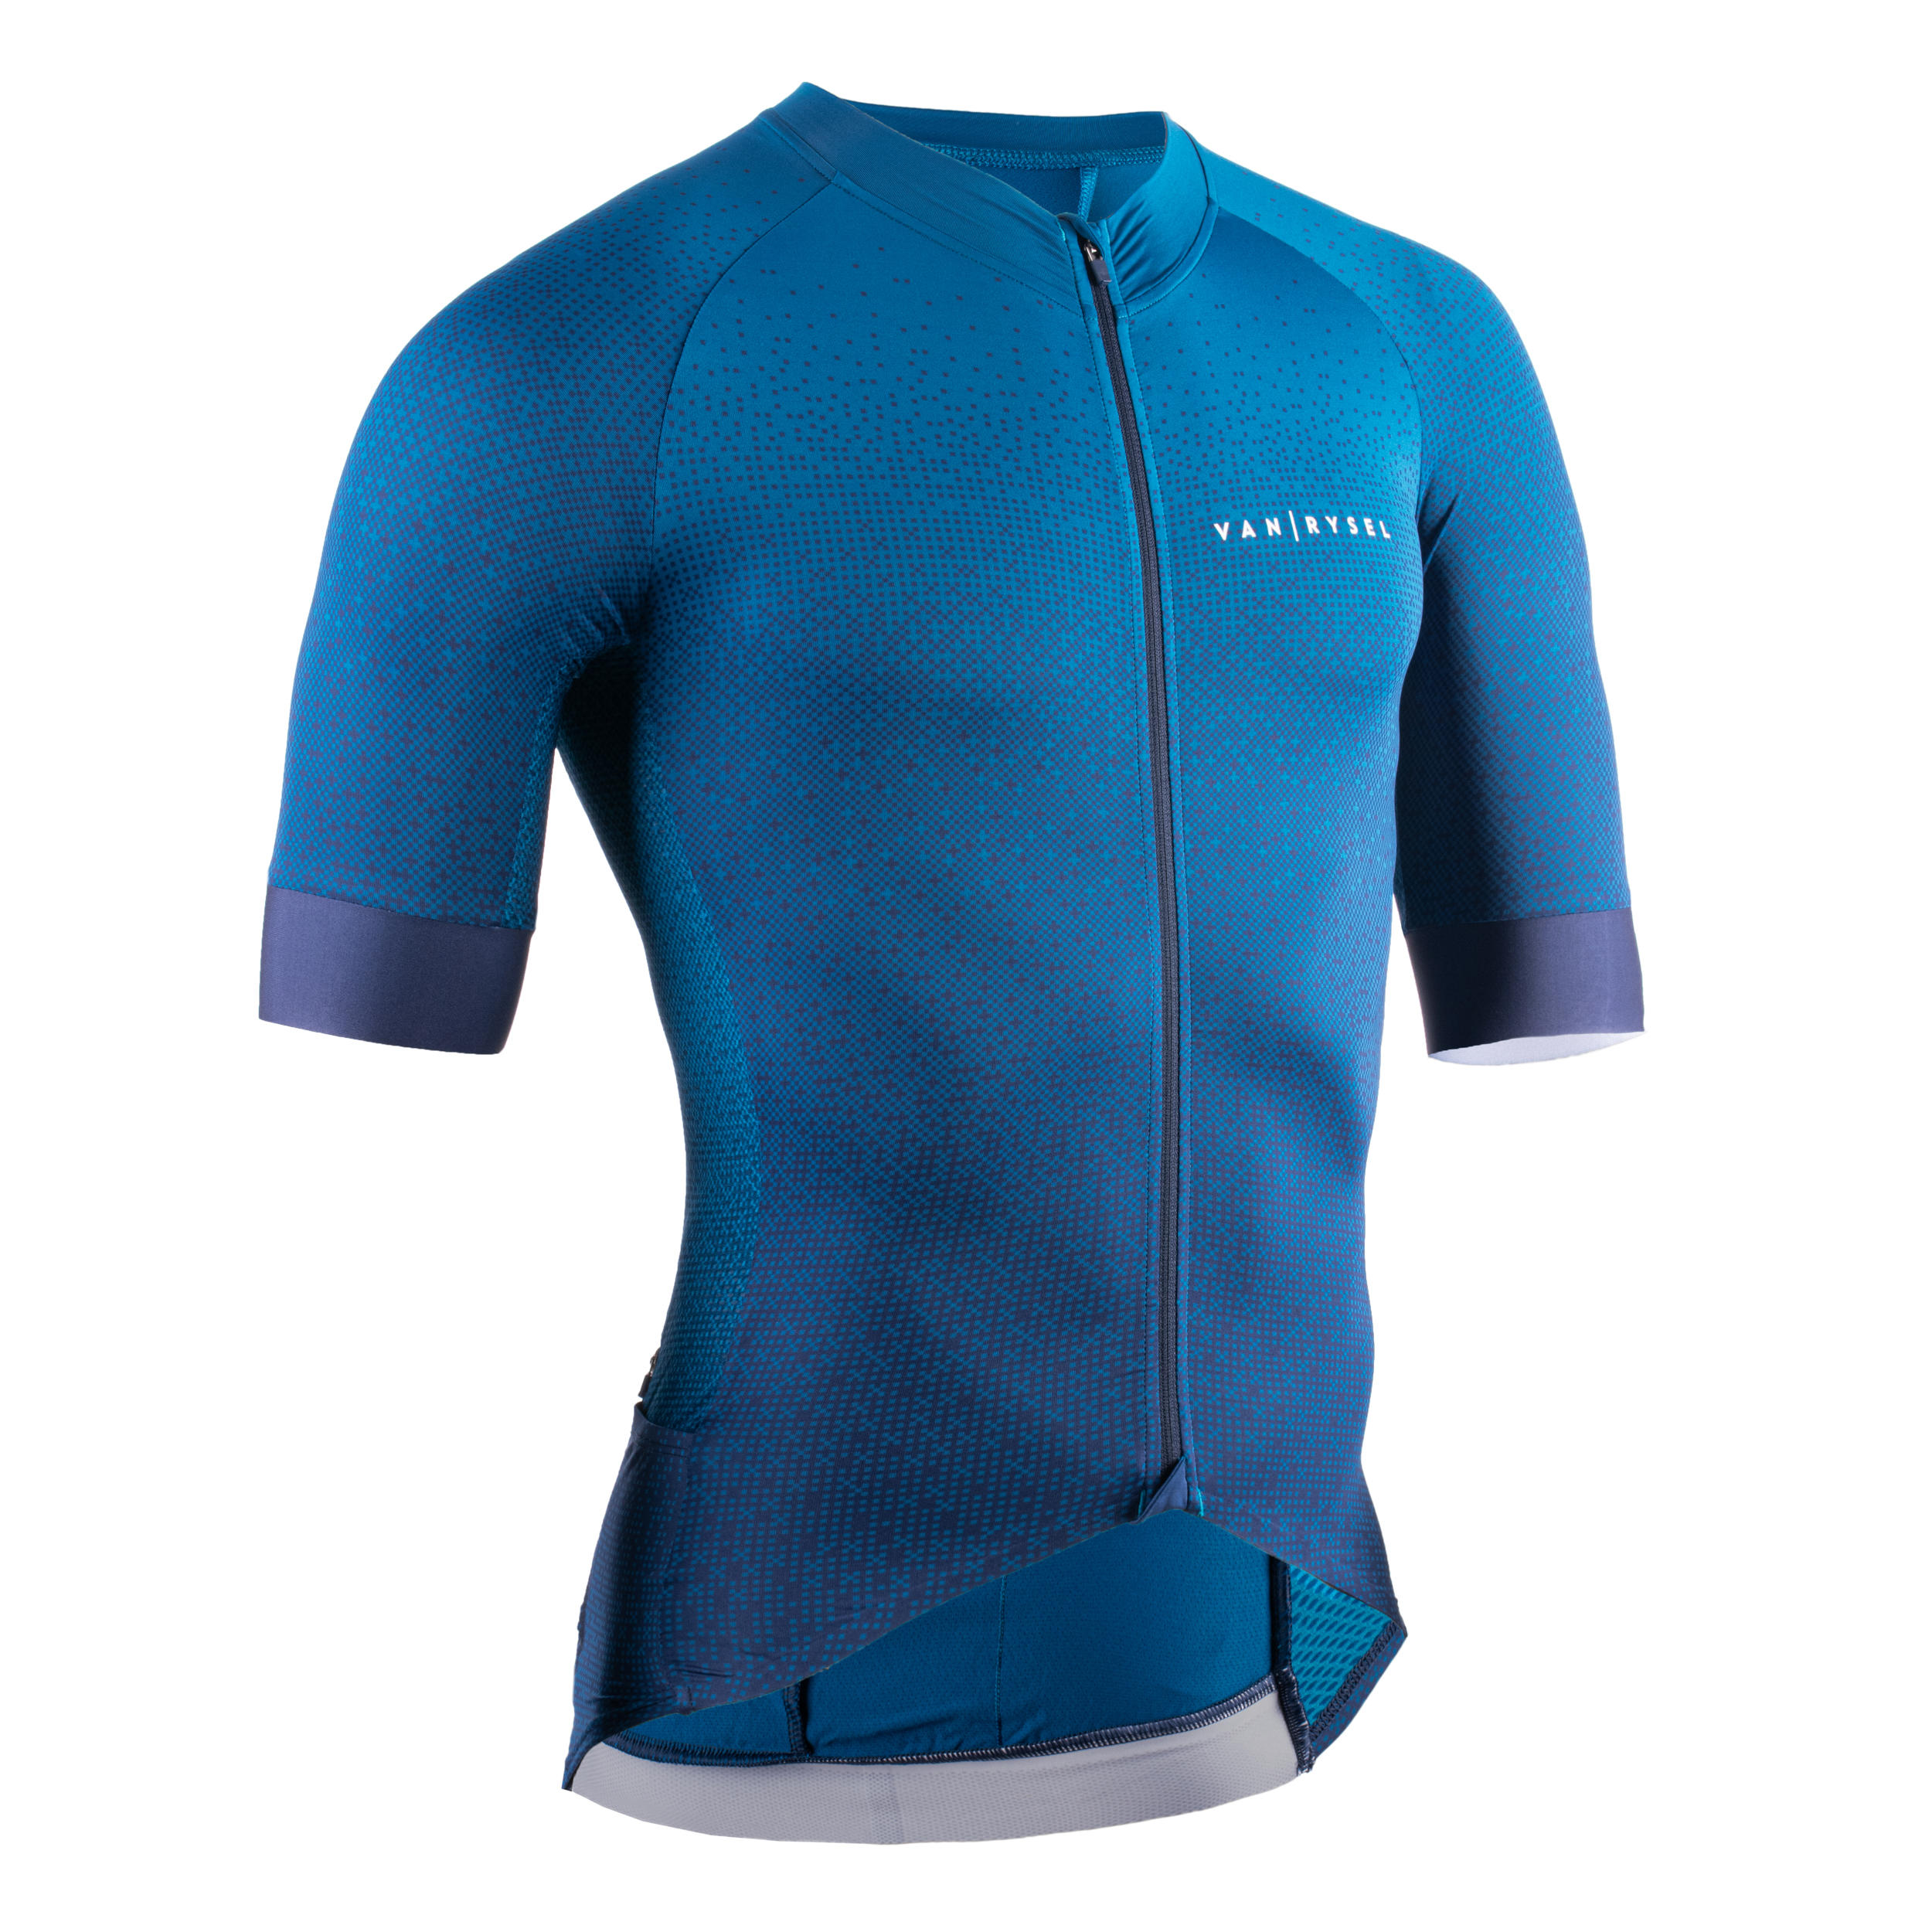 VAN RYSEL Men's Short-Sleeved Road Cycling Summer Jersey Endurance Racer - Blue